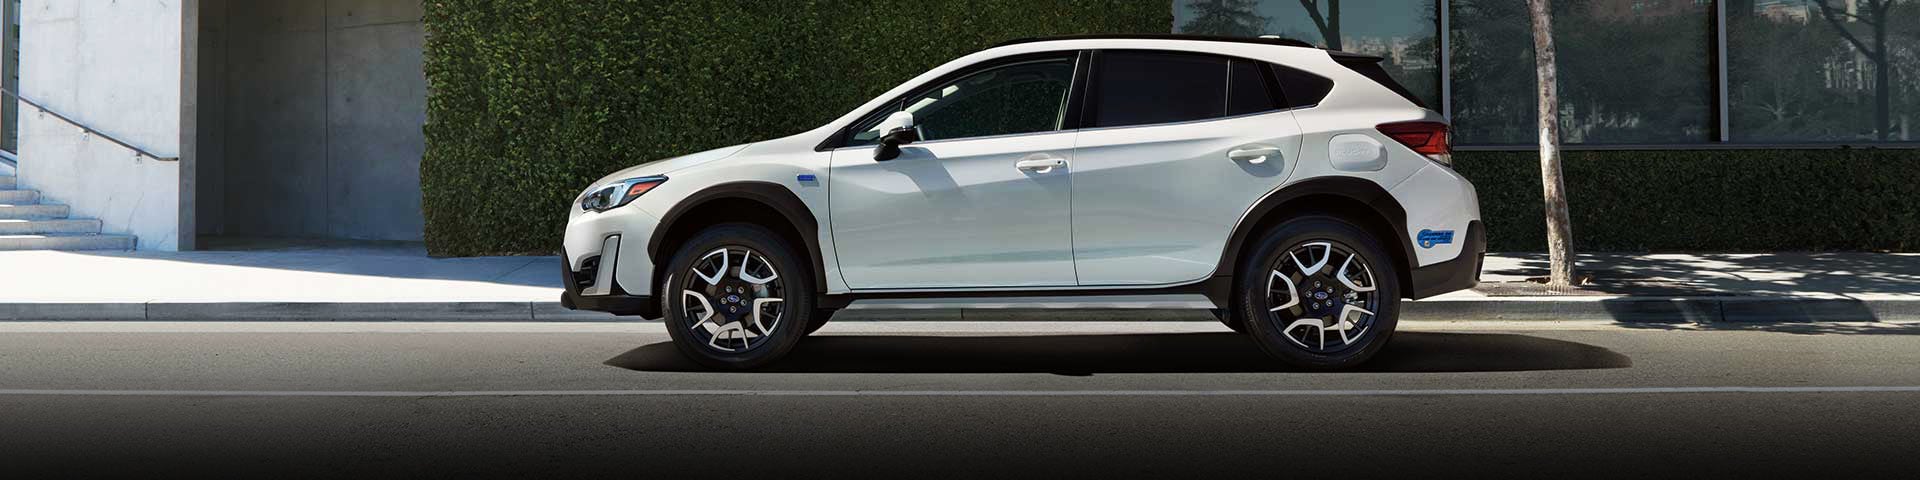 The side profile of a white Subaru Crosstrek Hybrid | Subaru Superstore of Surprise in Surprise AZ